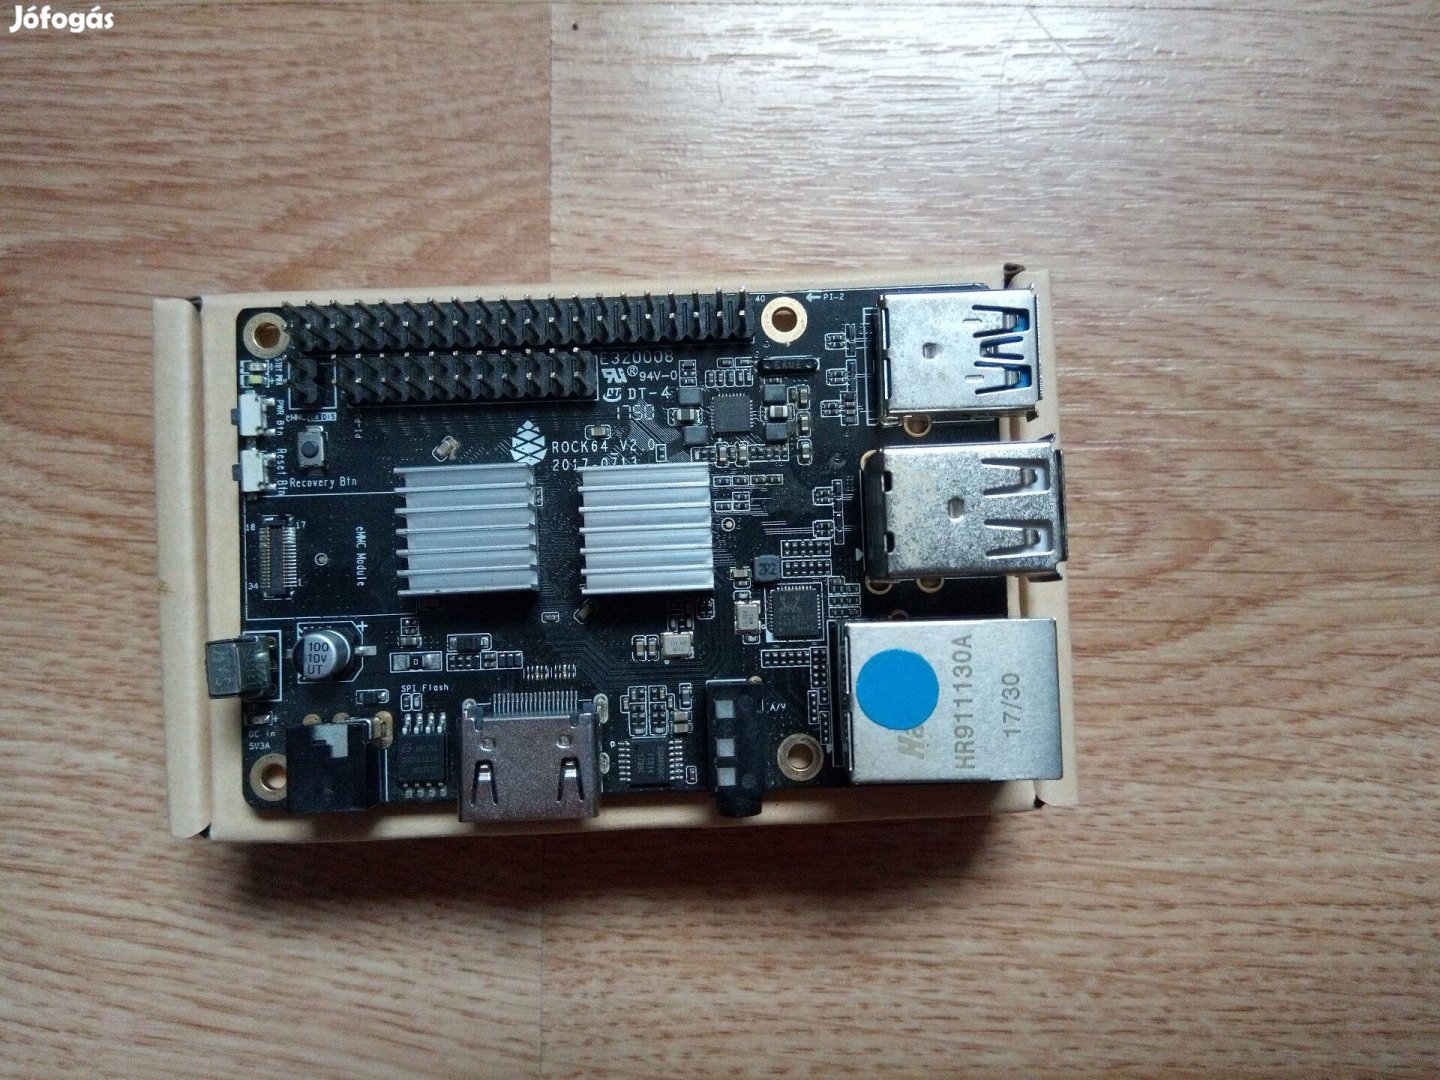 Pine64 Rock64 4GB RAM single board számítógép Raspberry Pi alternatíva